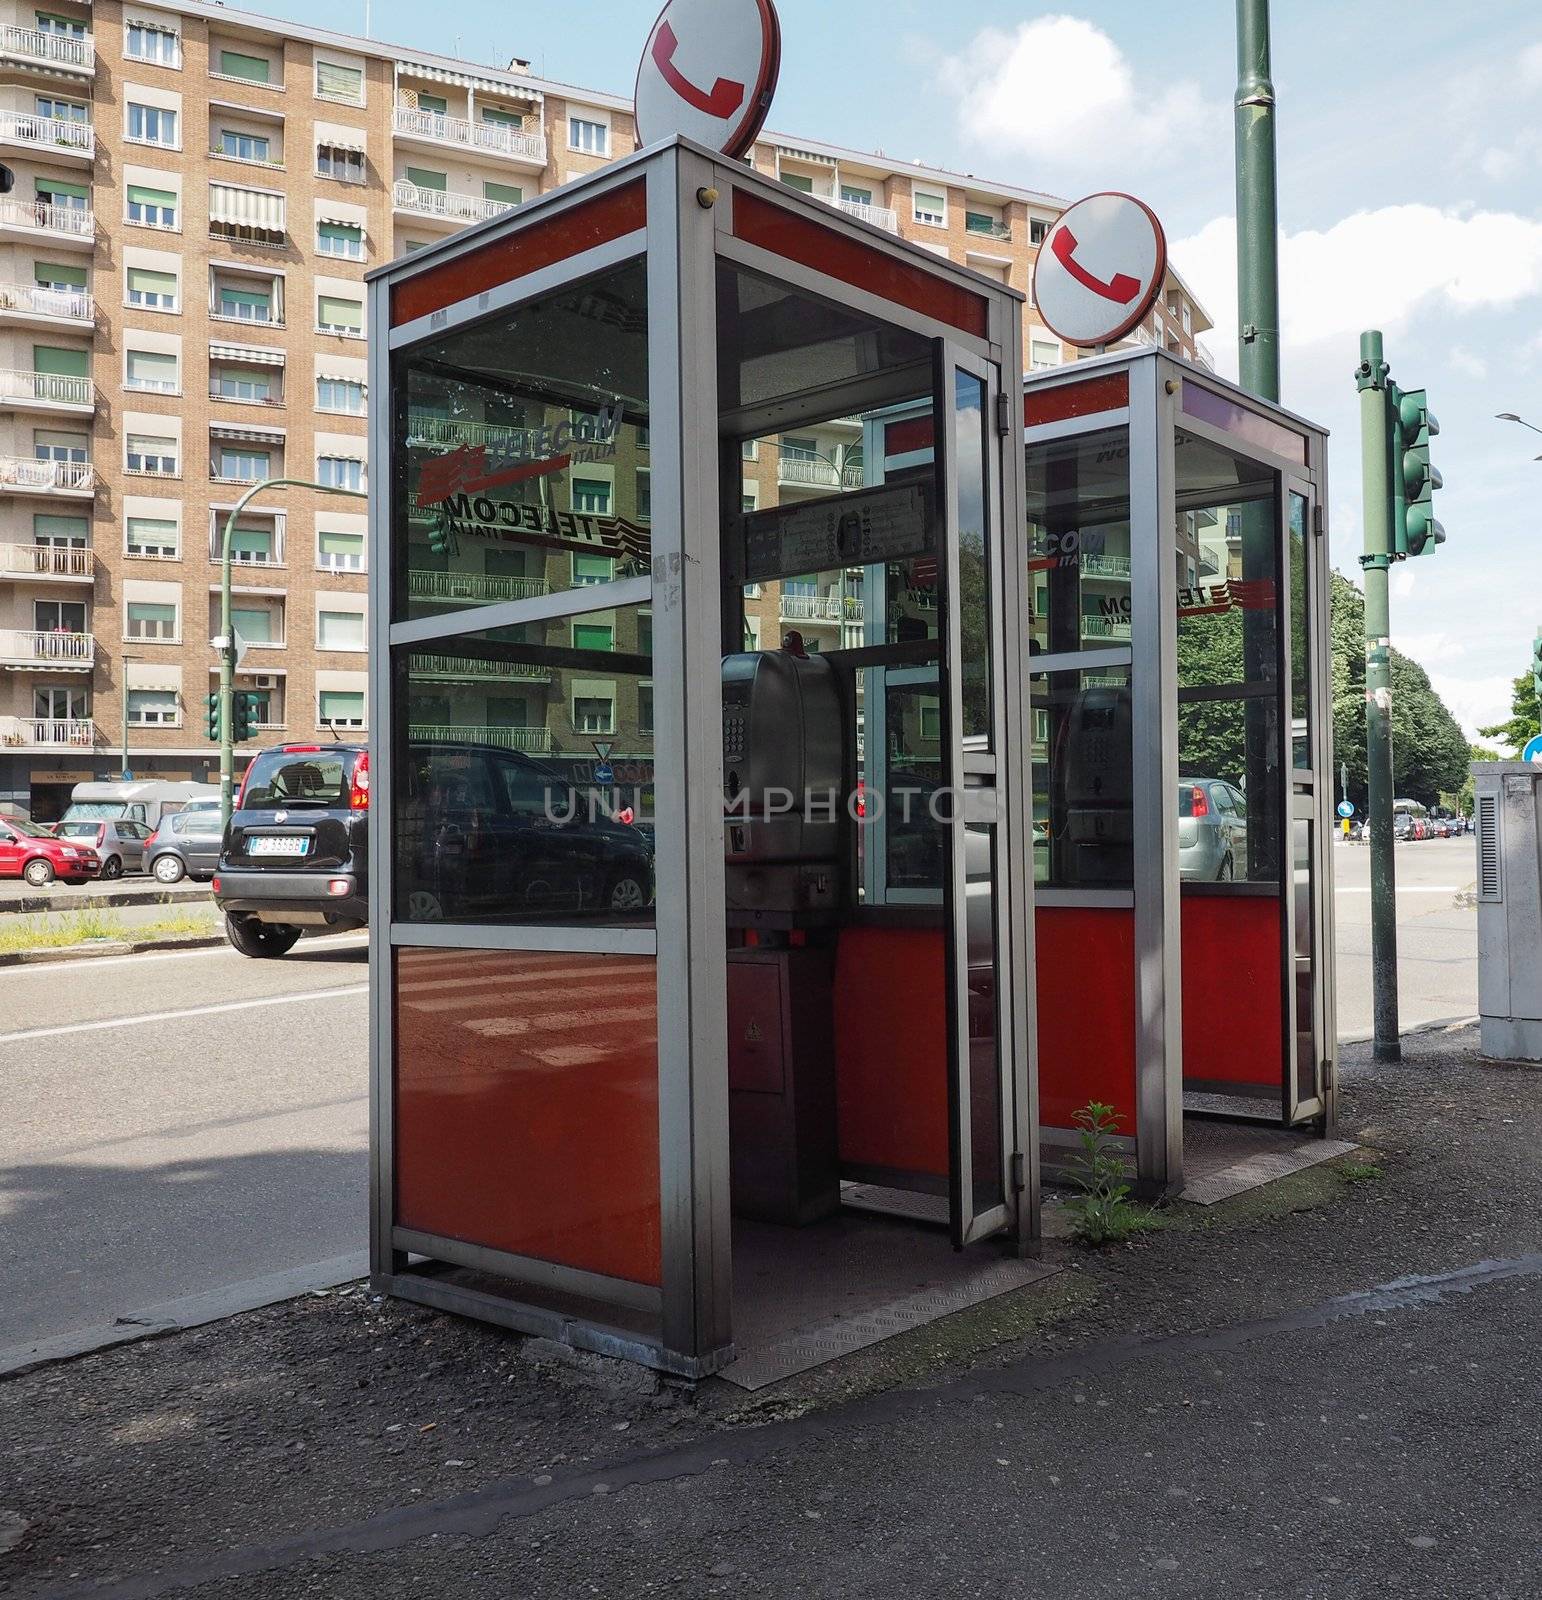 TURIN, ITALY - CIRCA MAY 2019: Vintage Telecom red phone boxes